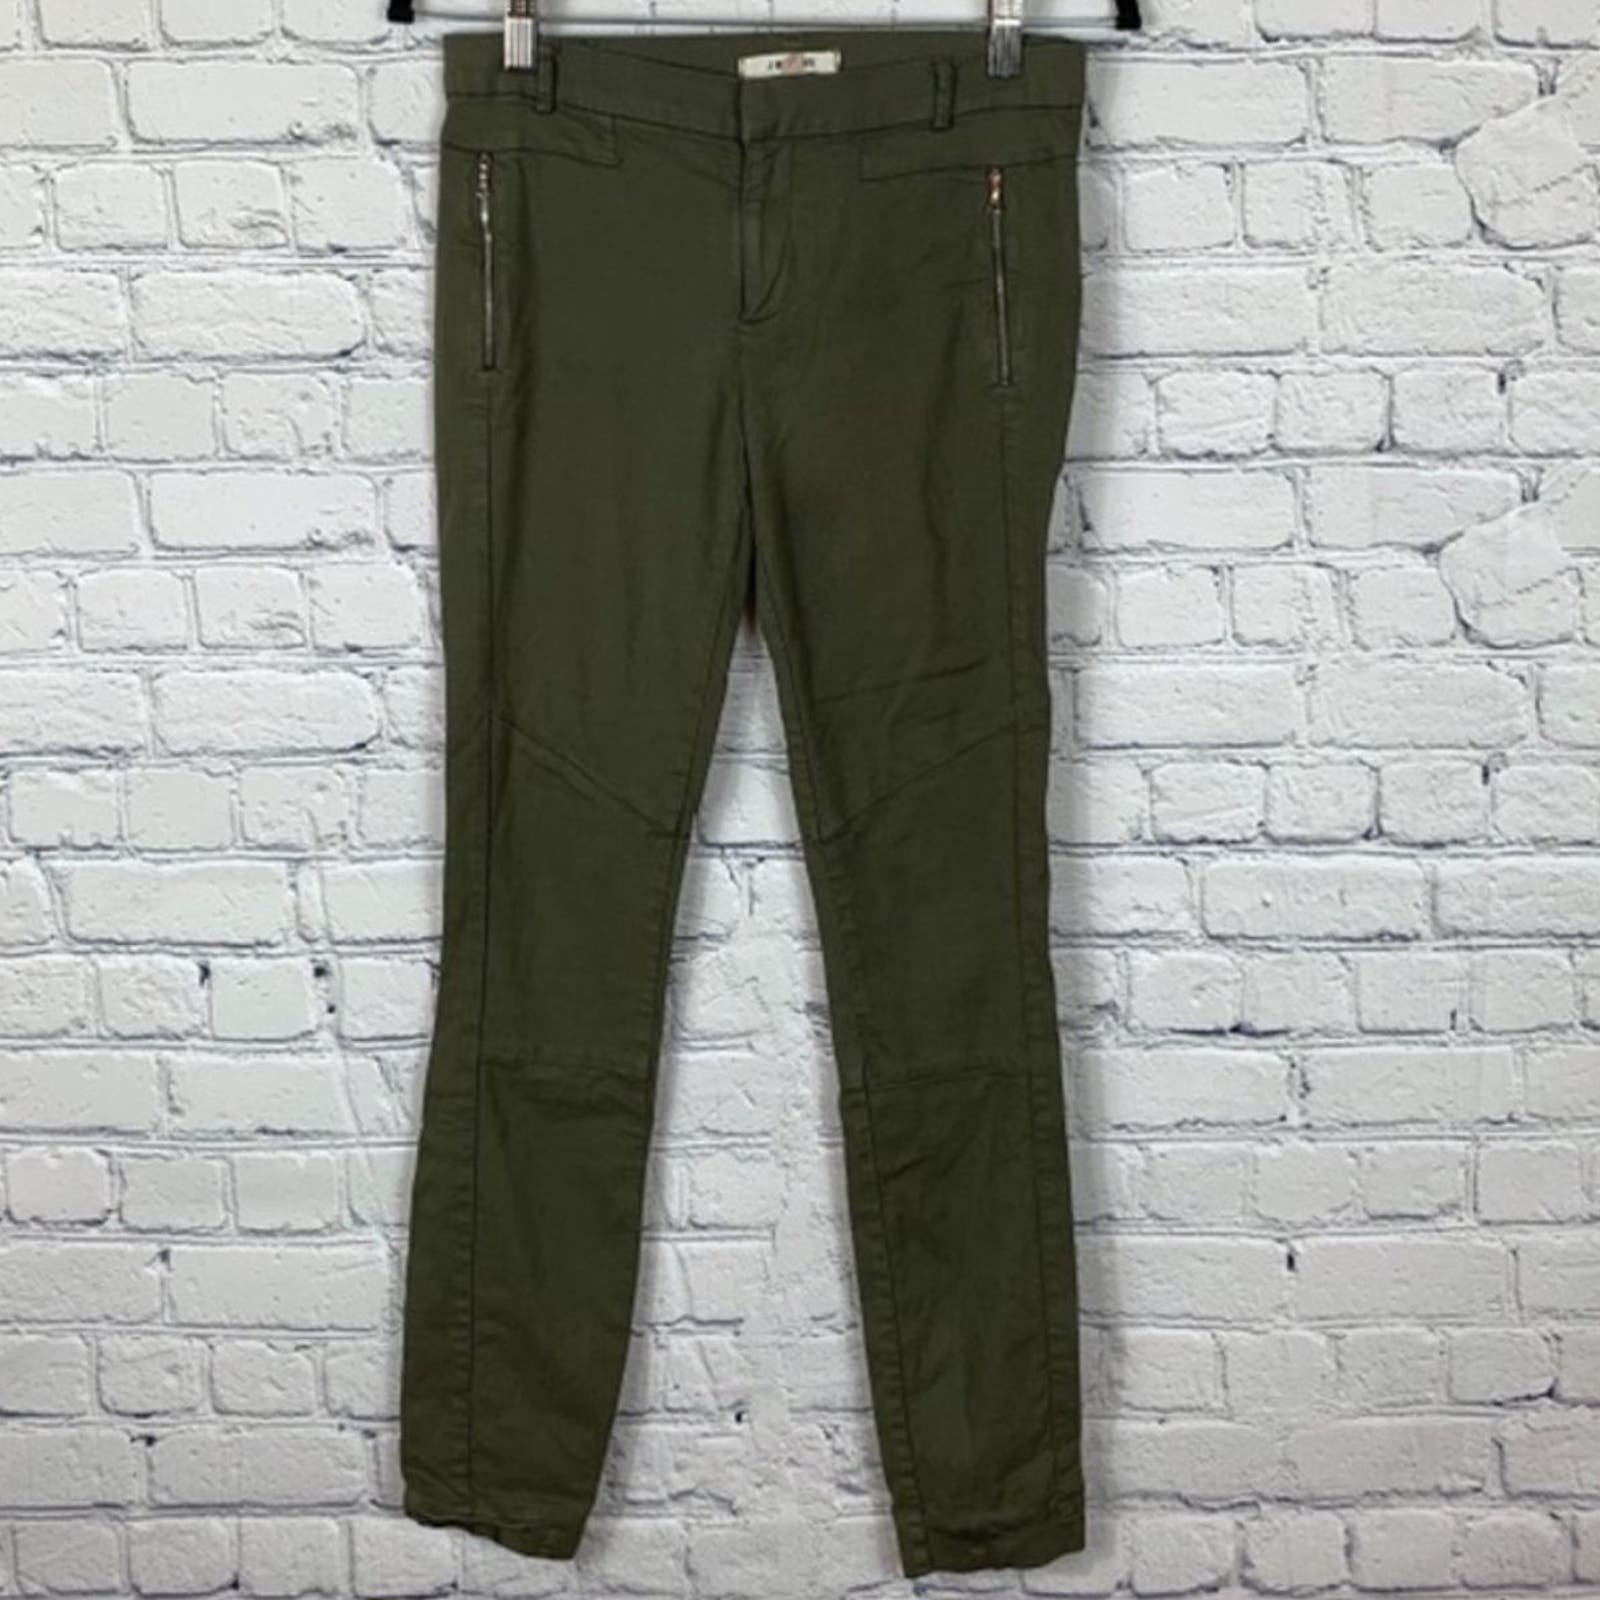 J Brand Army Green Skinny Leg Pants 4 p9PwUH0zf